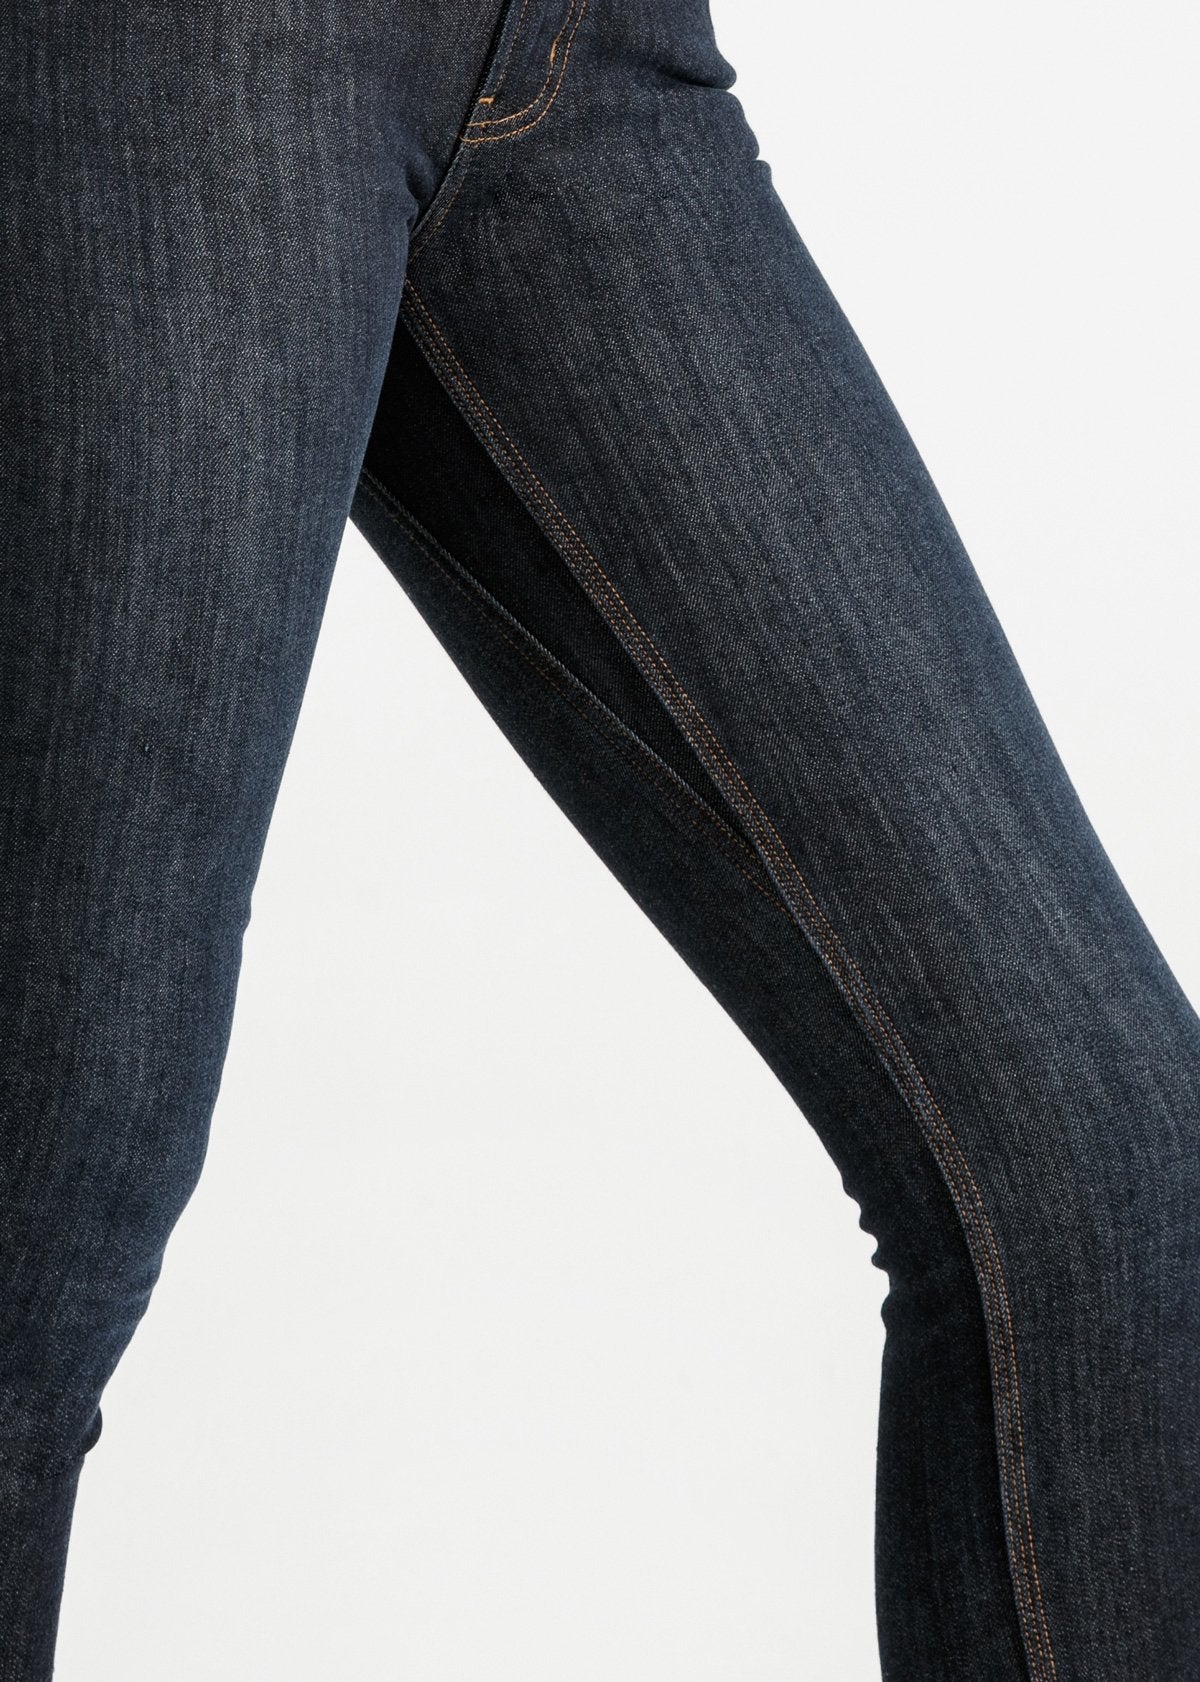 Sunisery Women High Waist Fleece Lined Jeans Winter Keep Warm Casual Slim  Stretch Denim Pants with Pocket Black XS 